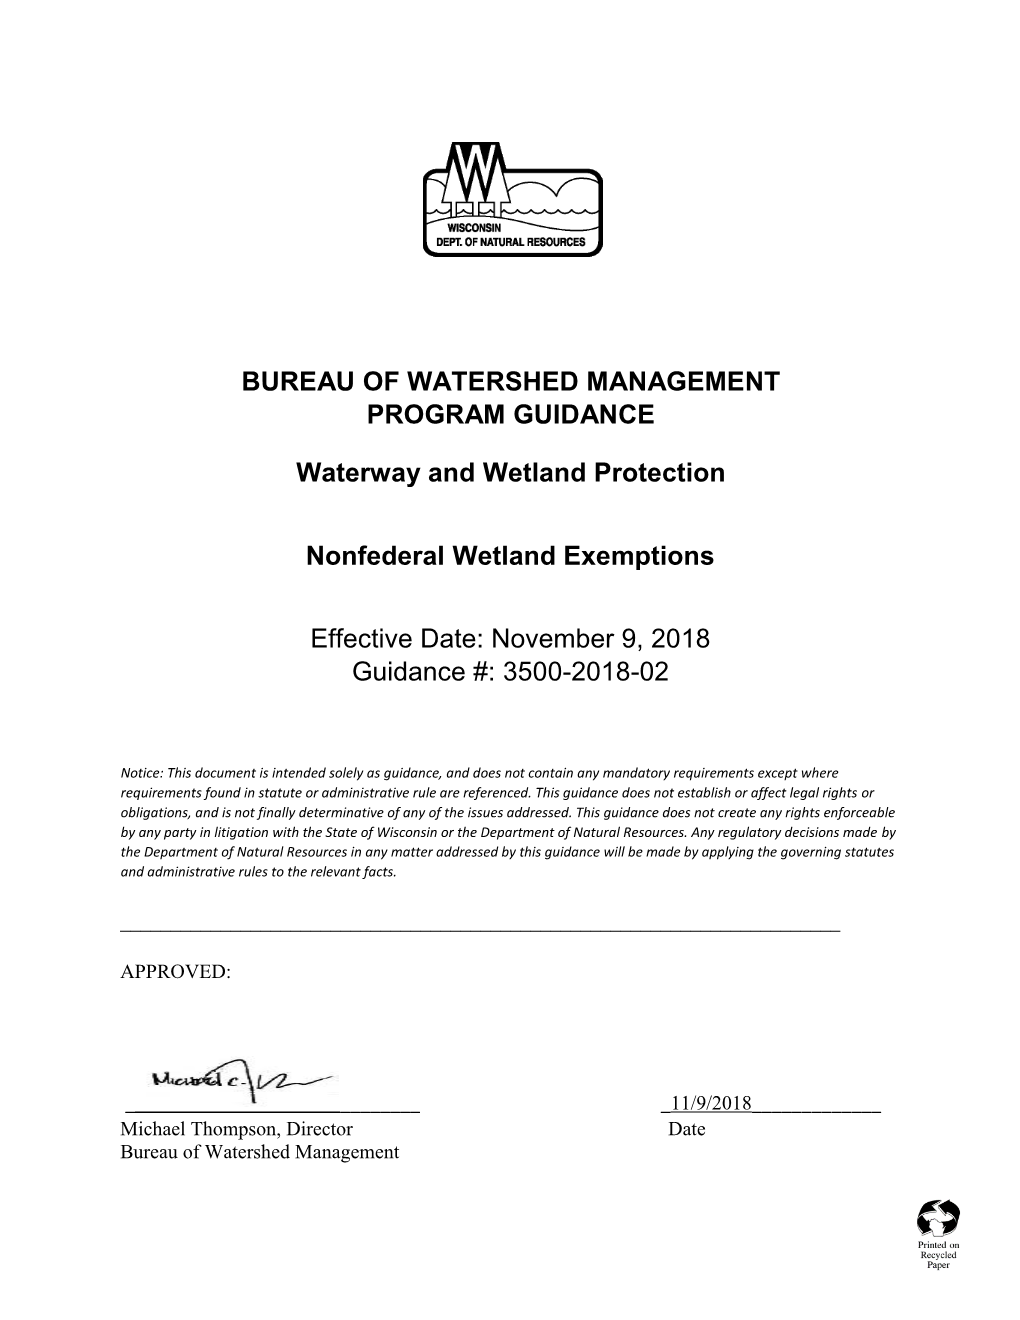 Nonfederal Wetland Exemption Guidance